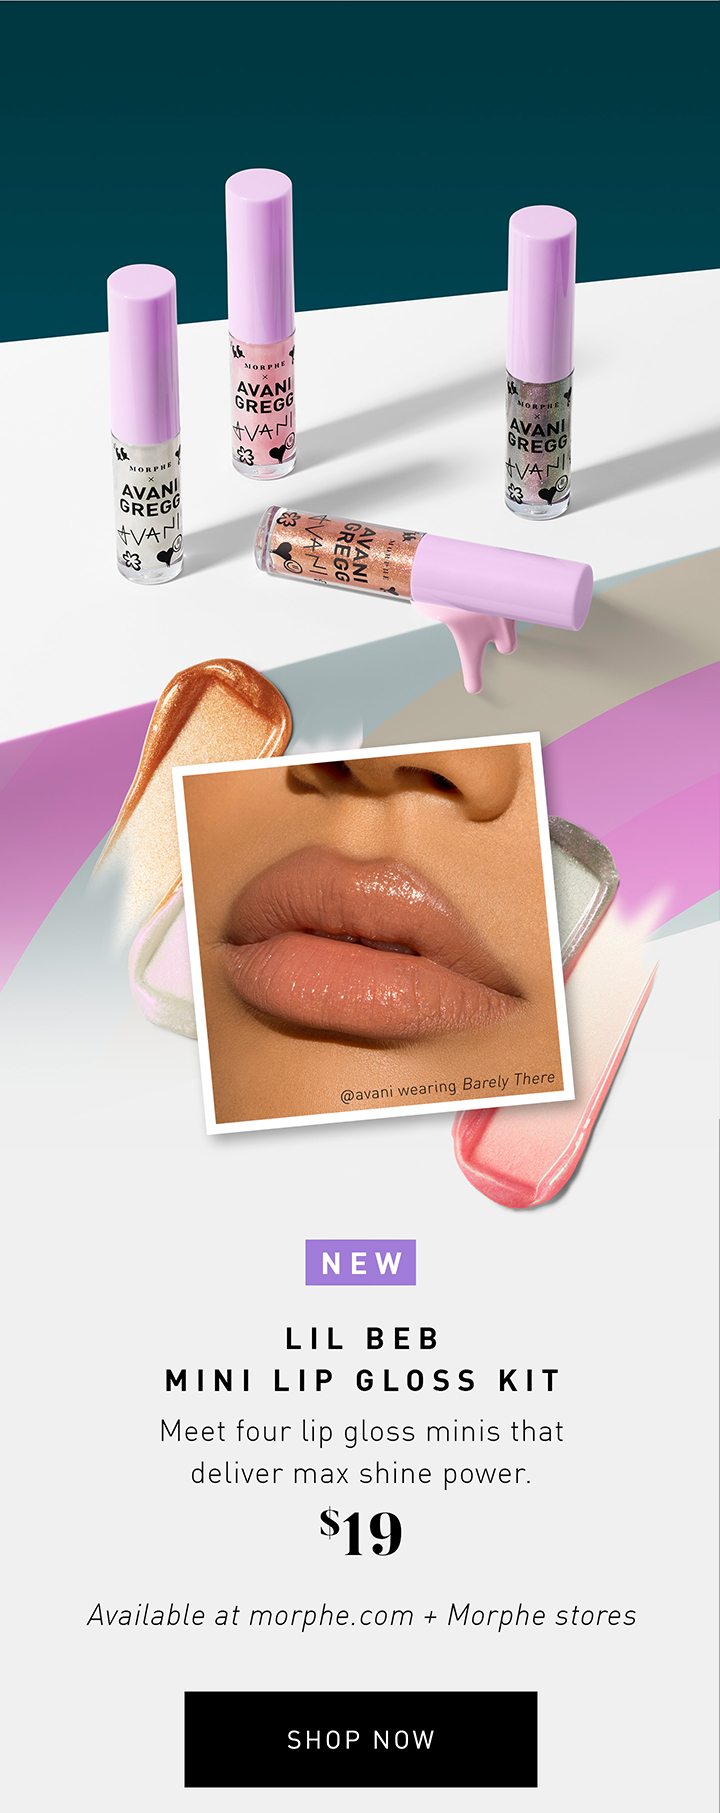 NEW LIL BEB MINI LIP GLOSS KIT Meet four lip gloss minis that deliver max shine power. $19 